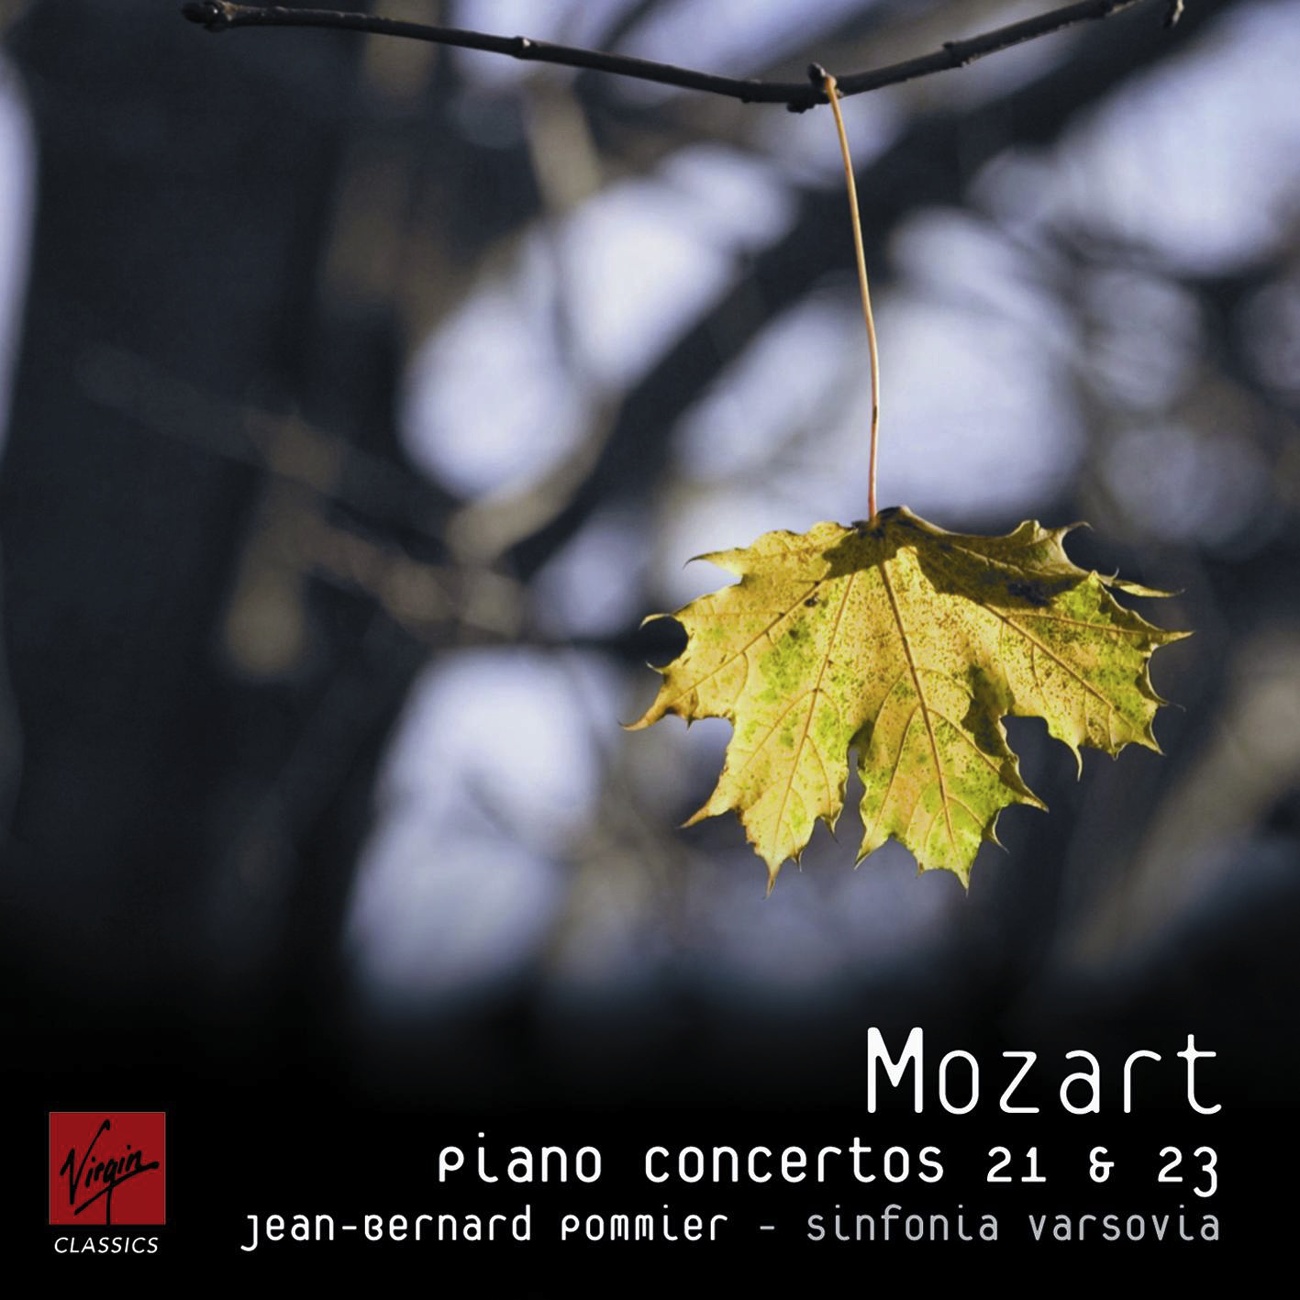 Piano Concerto No. 23 in A major K488: I.       Allegro - Cadenza - Tempo I